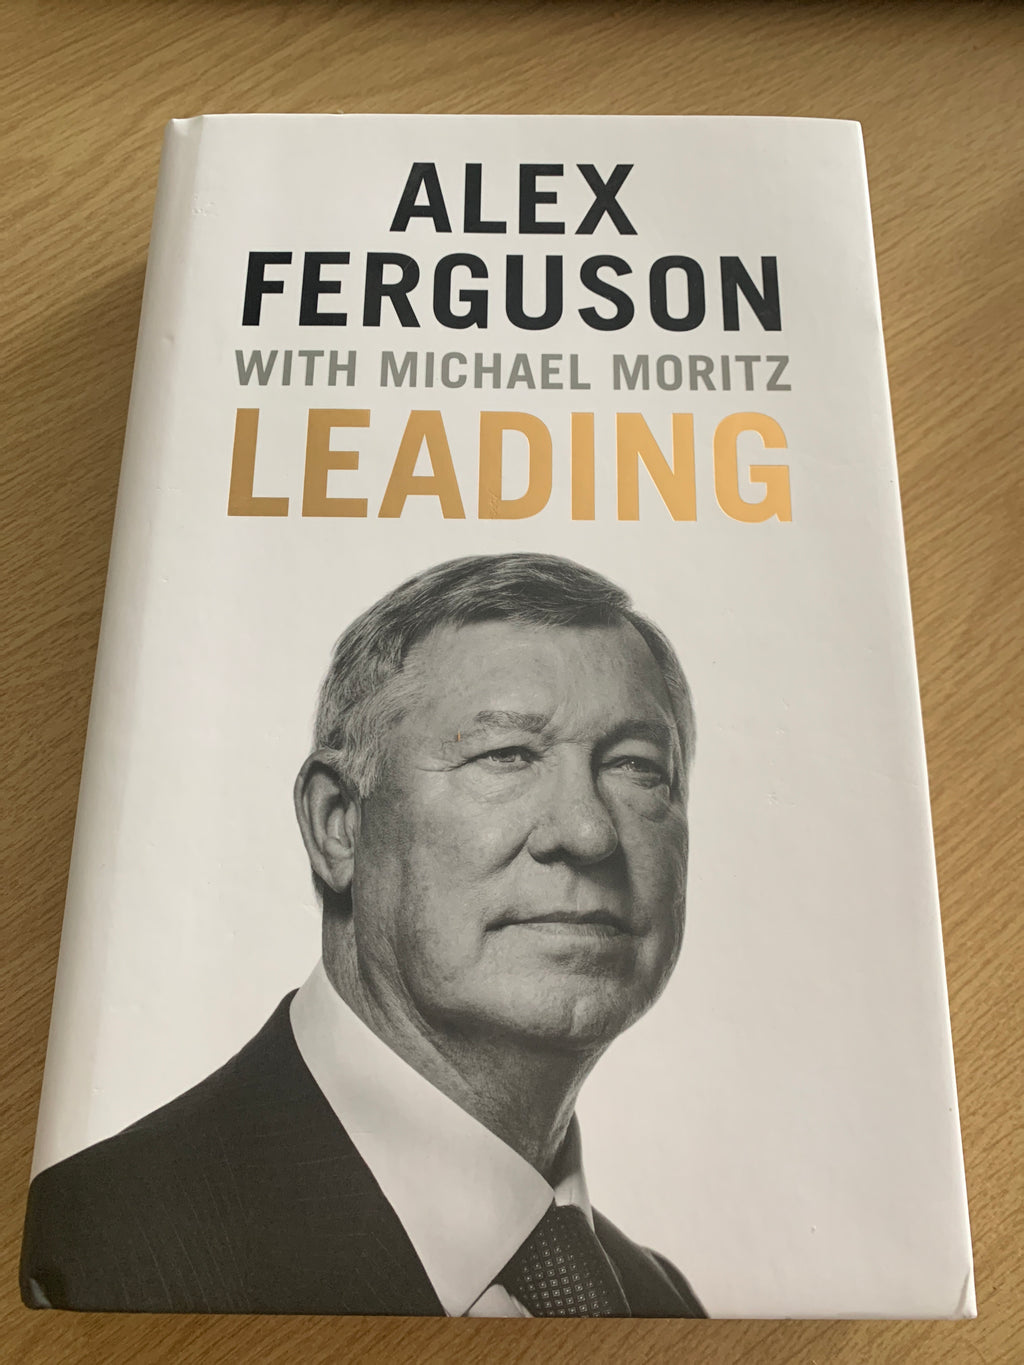 Alex Ferguson Signed The Book Leading